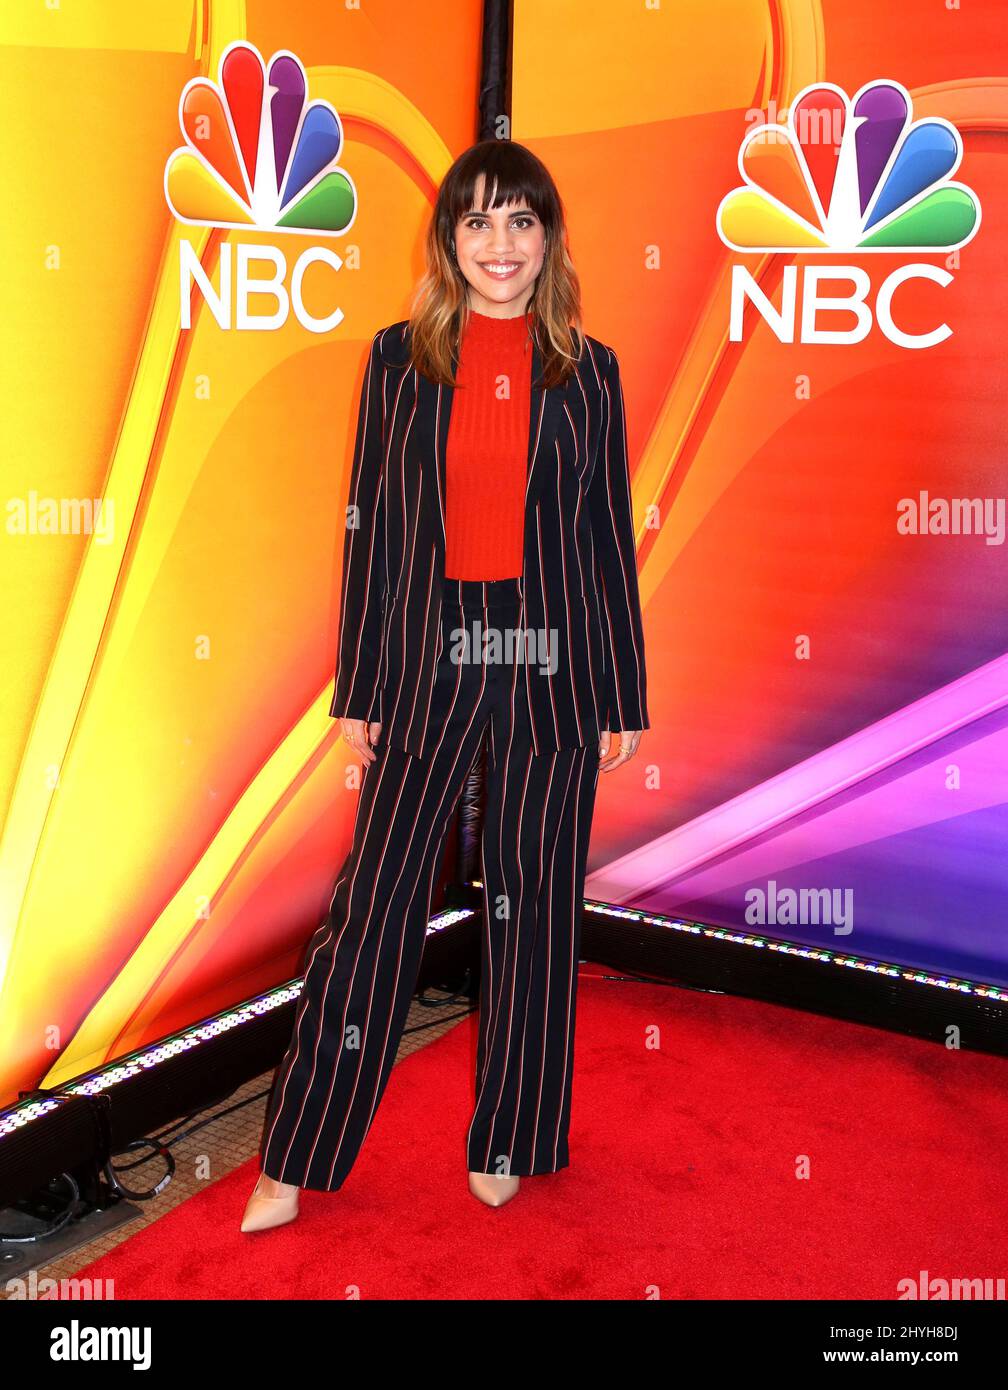 Natalie Morales attending the NBC Midseason Press Day in New York Stock Photo